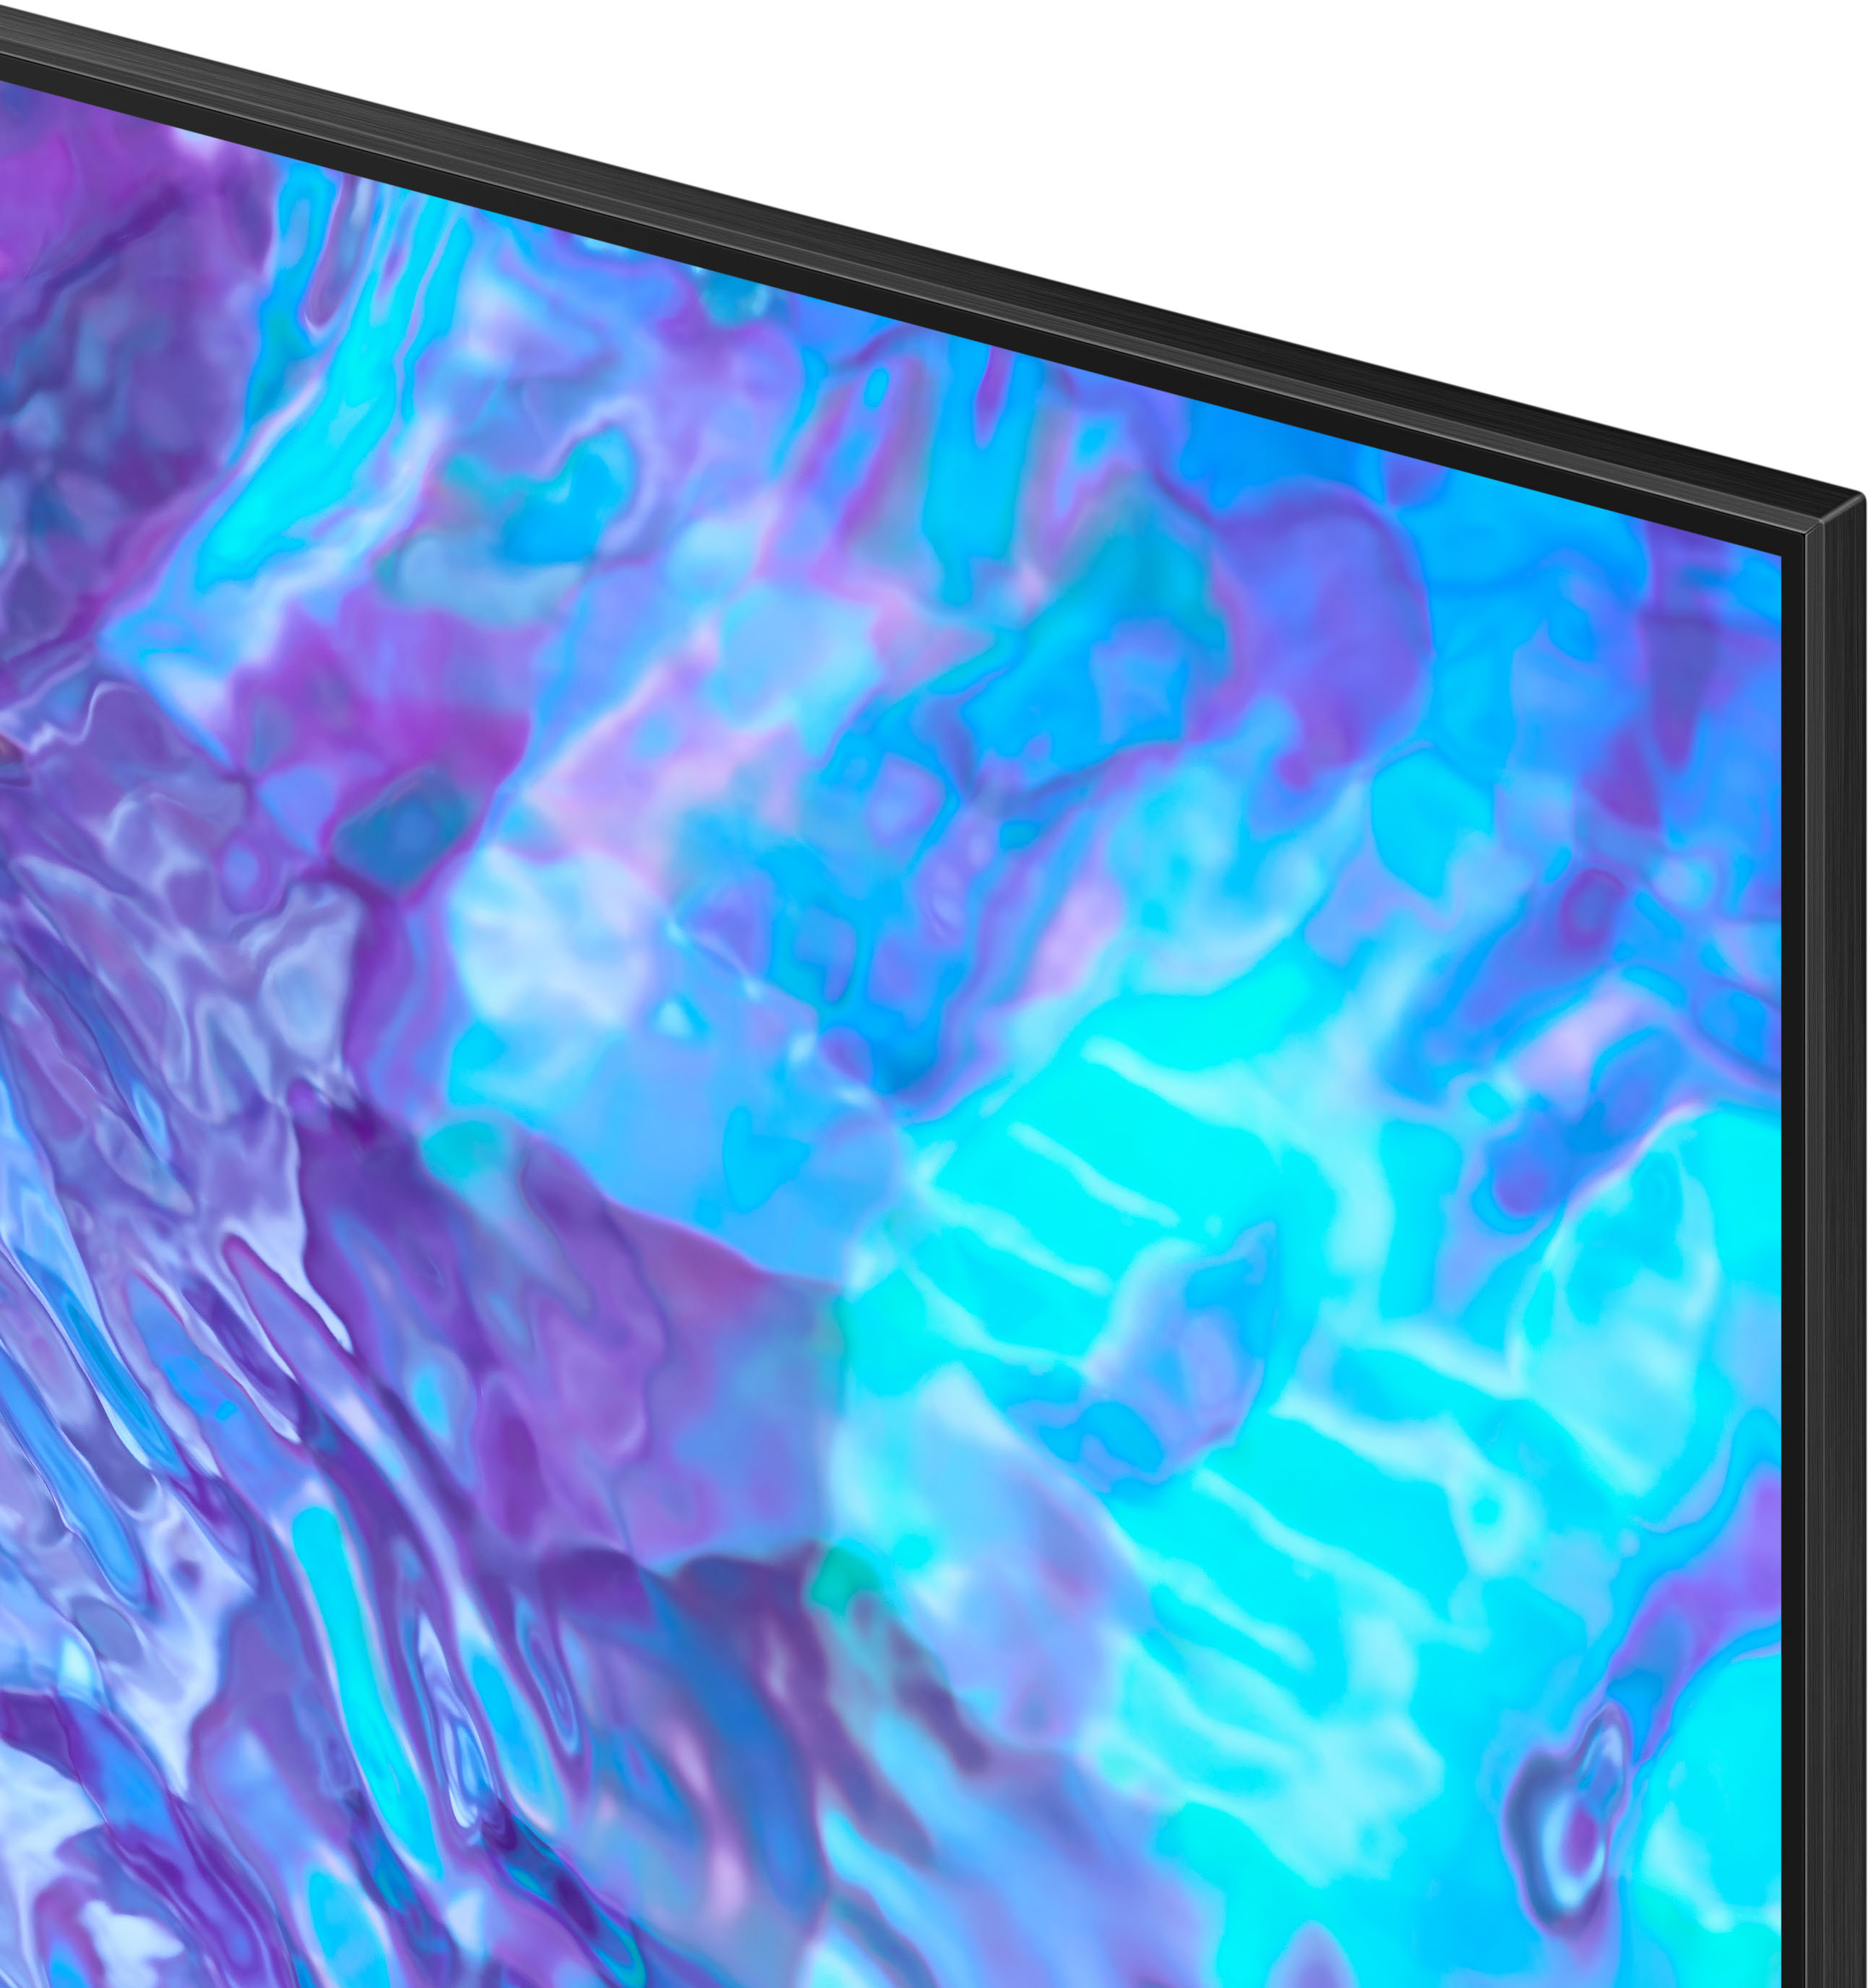 Samsung 65 Inch QLED Ultra HD (4K) TV (65Q8C) Online at Lowest